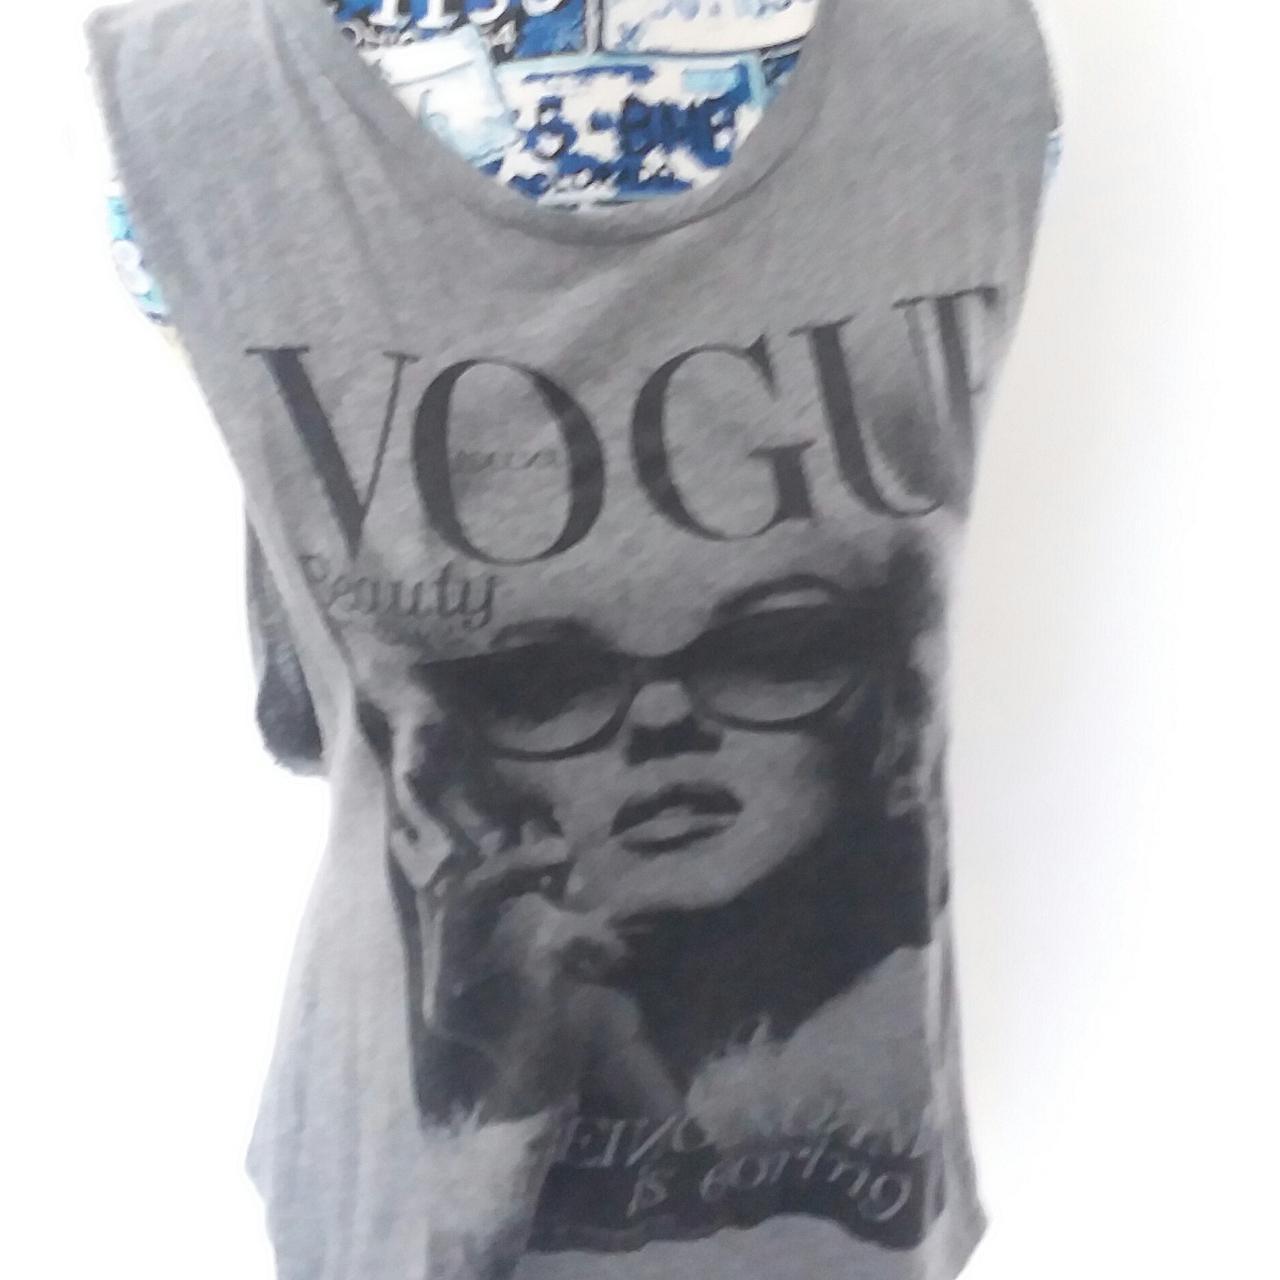 Product Image 2 - Vintage Marilyn Monroe Vogue Beauty